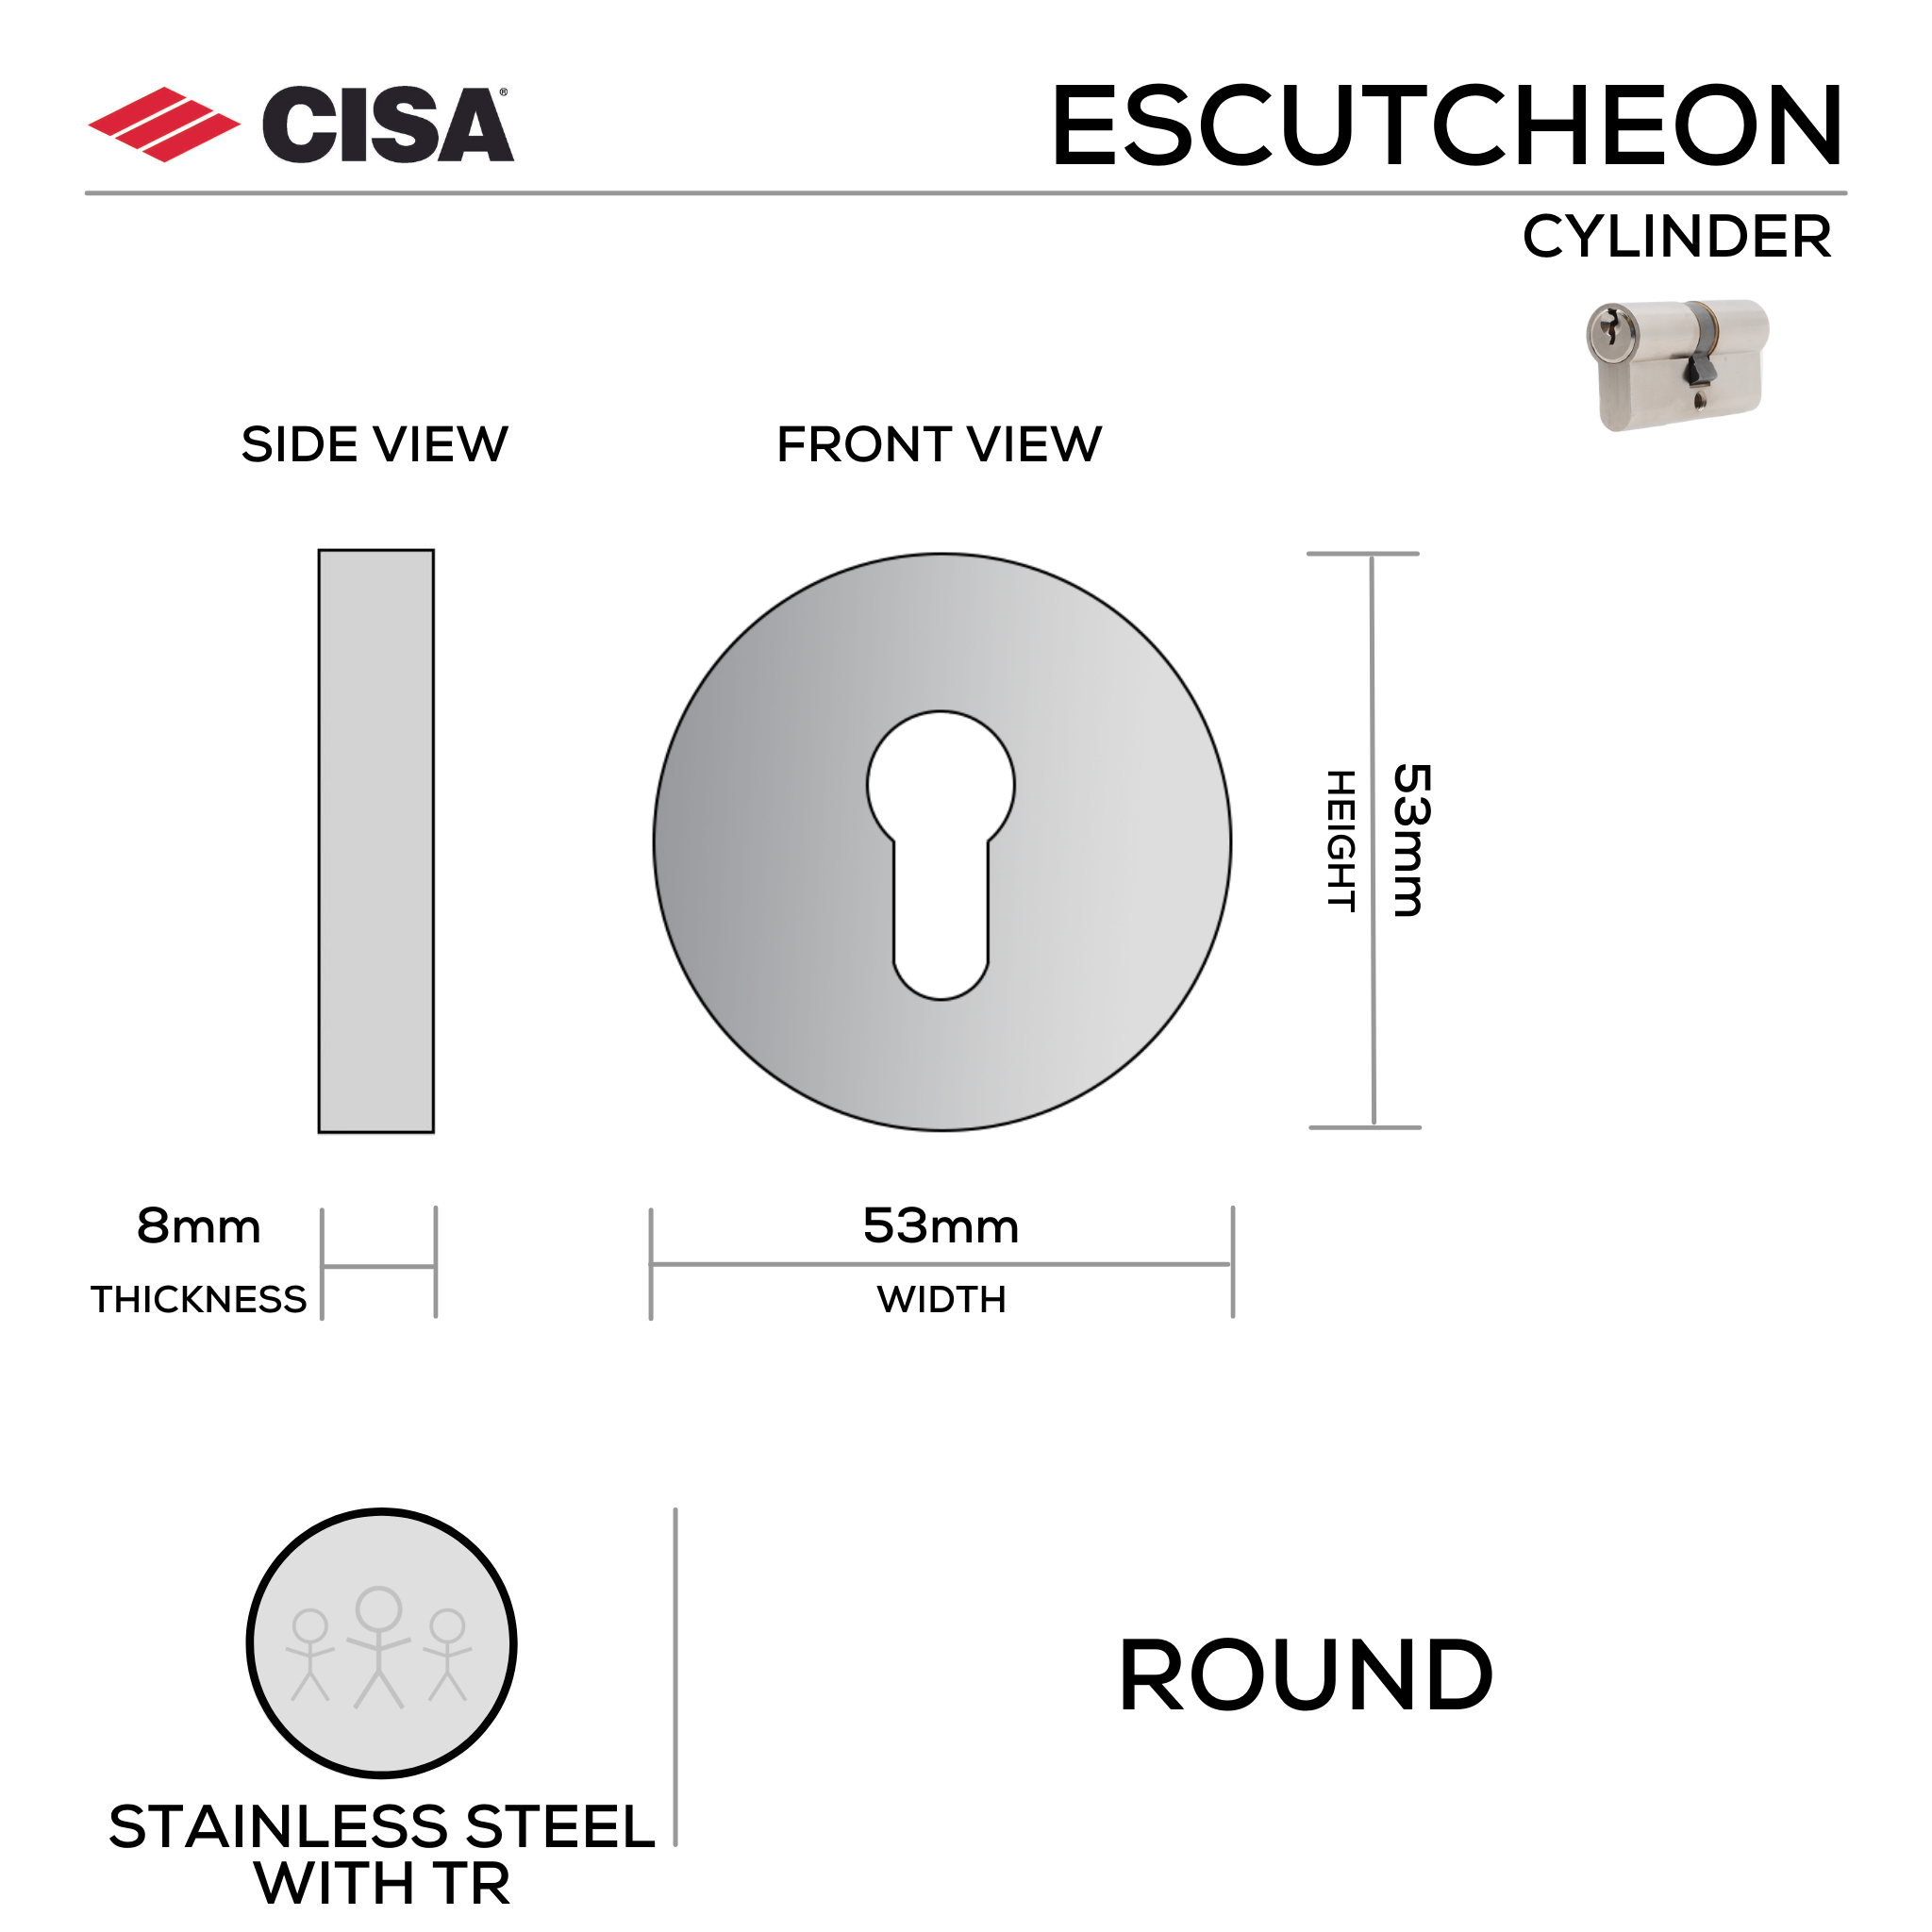 FE.R.C.TR, Cylinder Escutcheon, Round Rose, 53mm (h) x 53mm (w) x 8mm (t), Tarnish Resistant, CISA